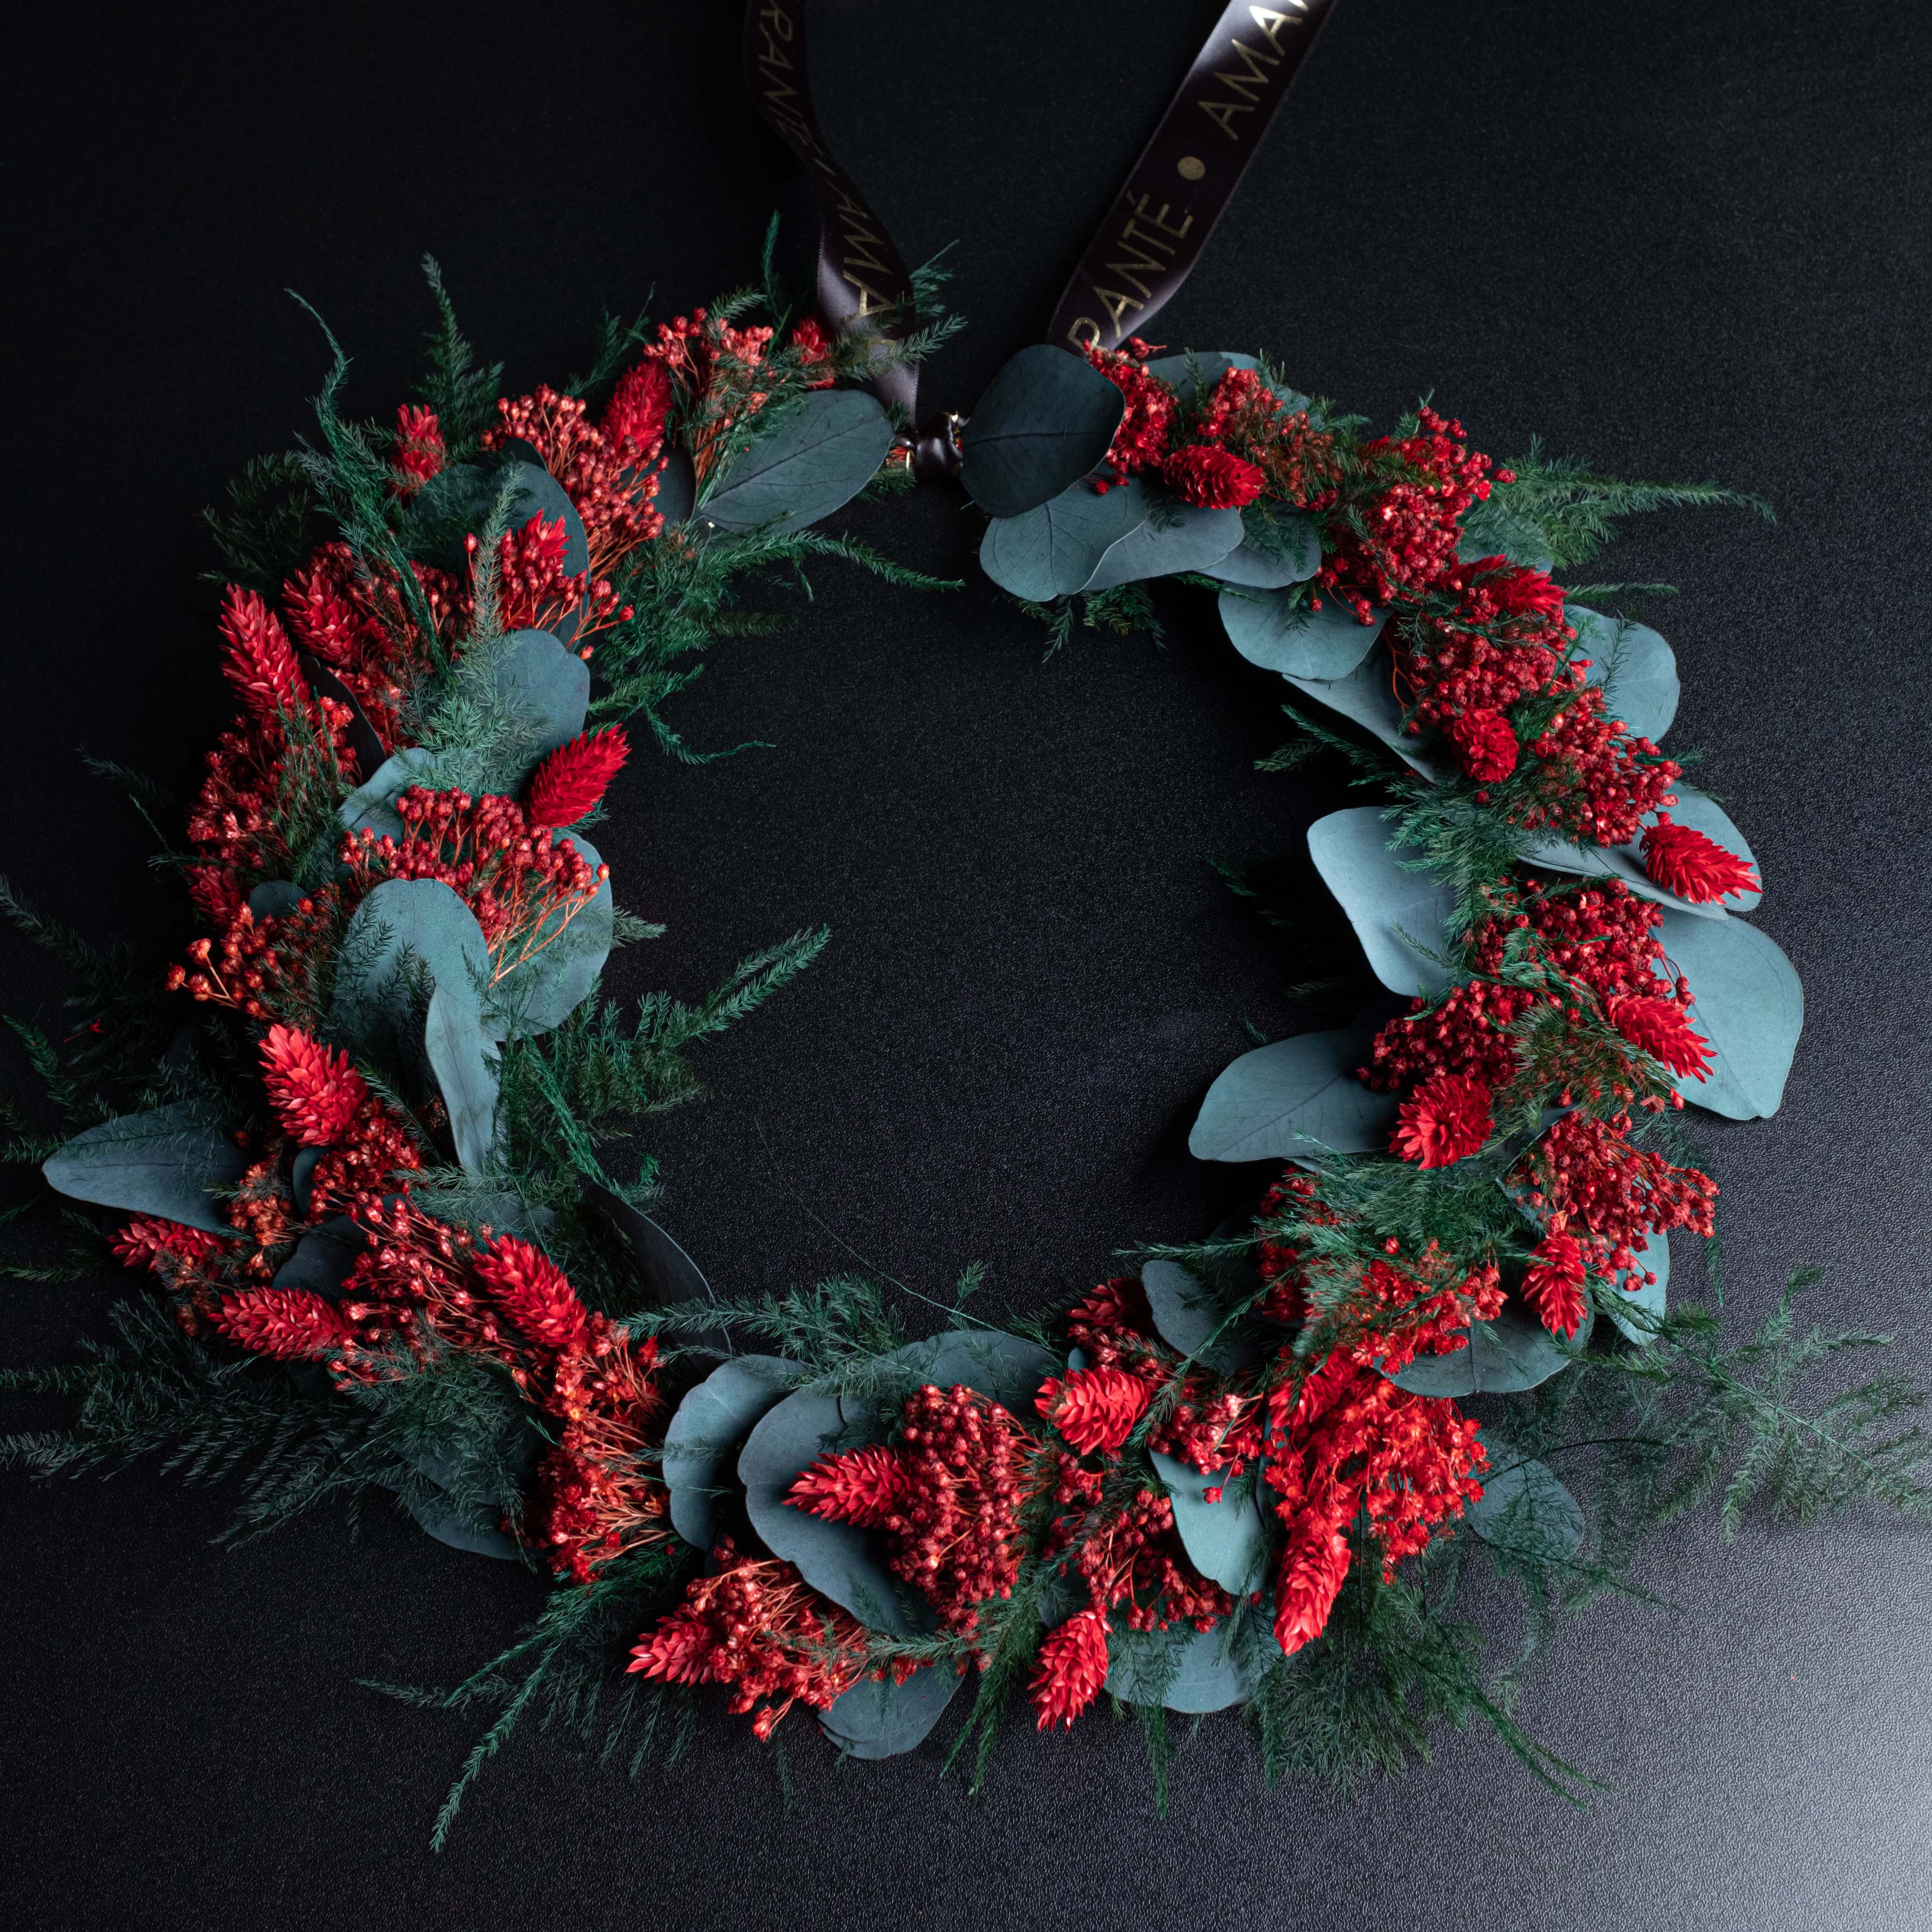 Illuminating and Cheerful DIY Christmas Floral Decorations